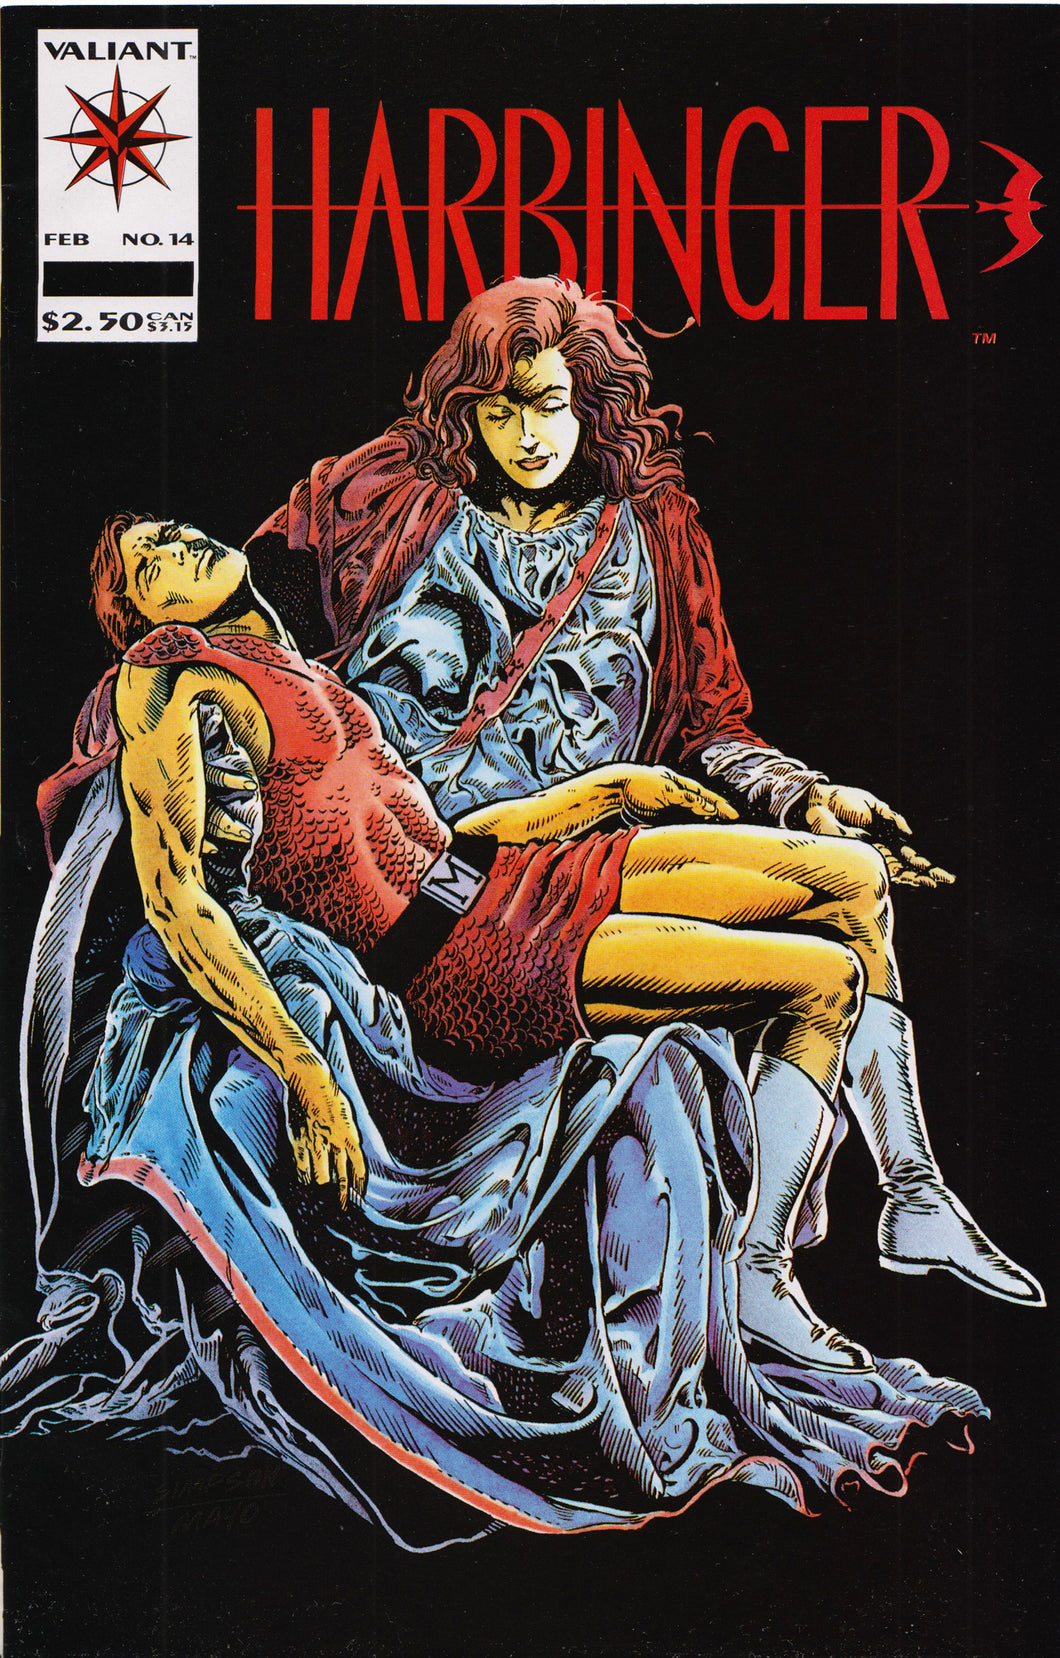 HARBINGER #14 COMIC BOOK ~ Valiant Comics